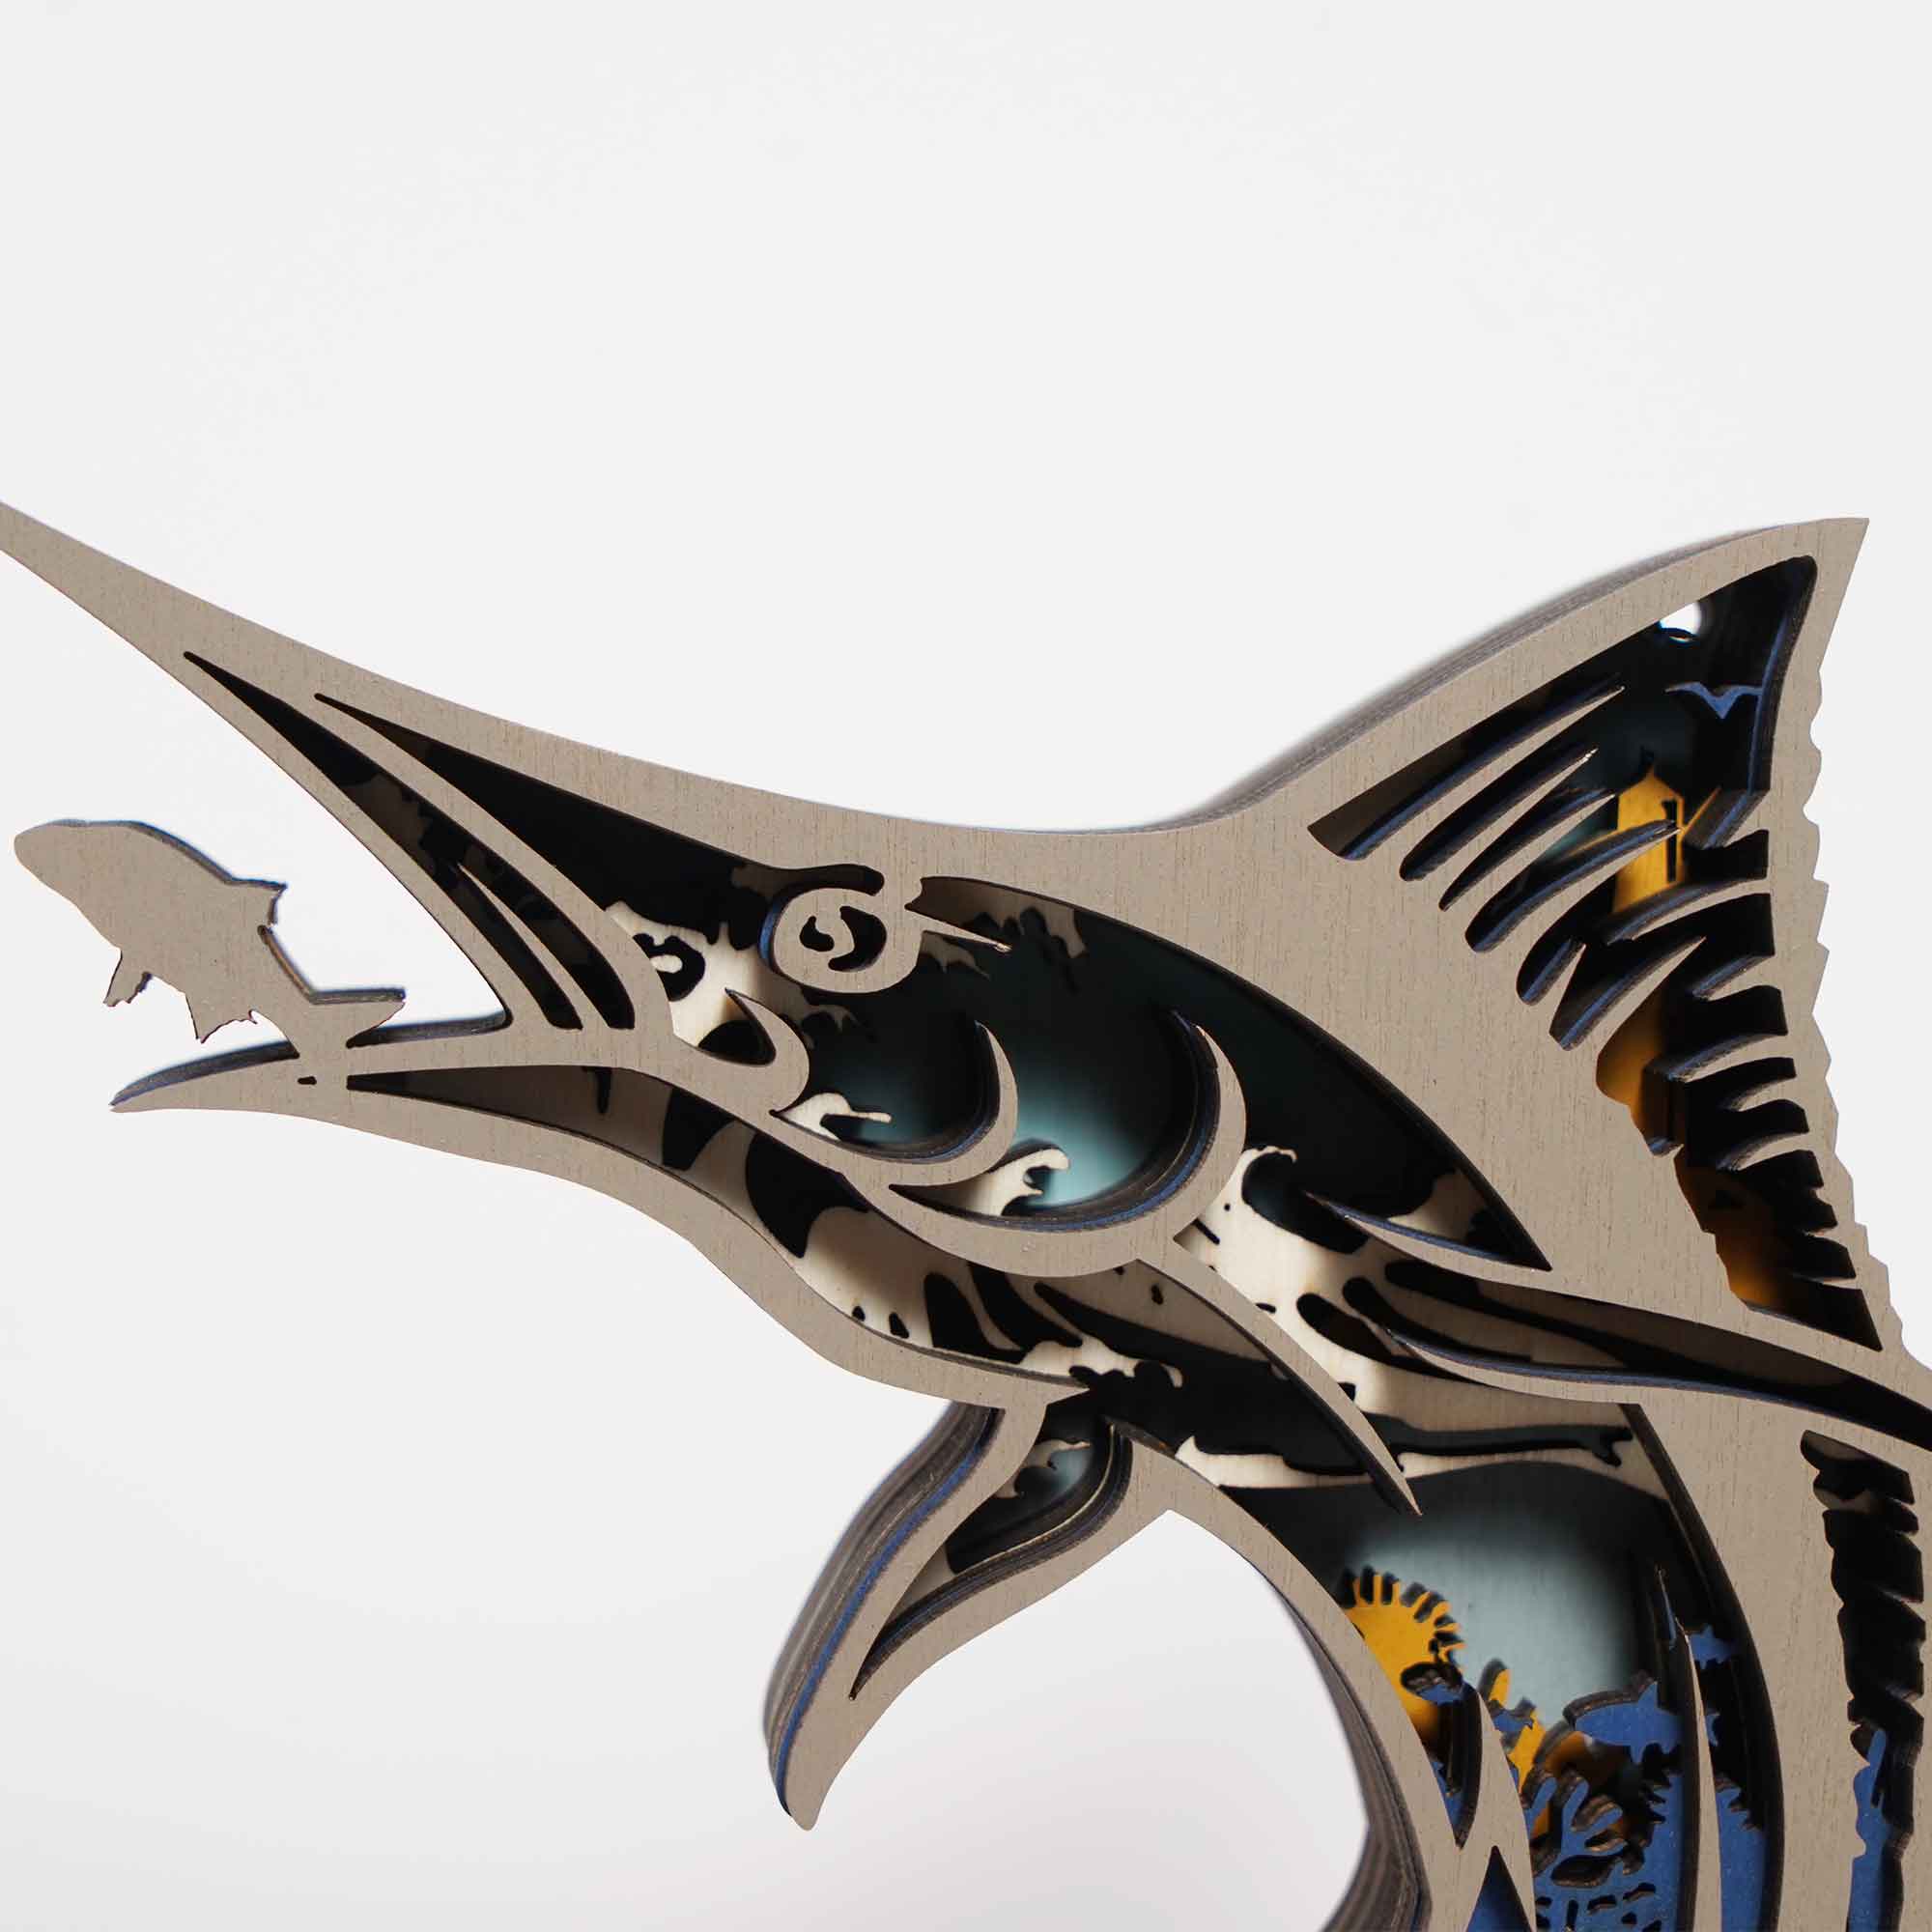 New Arrivals✨-Atlantic blue marlin Carving Handcraft Gift